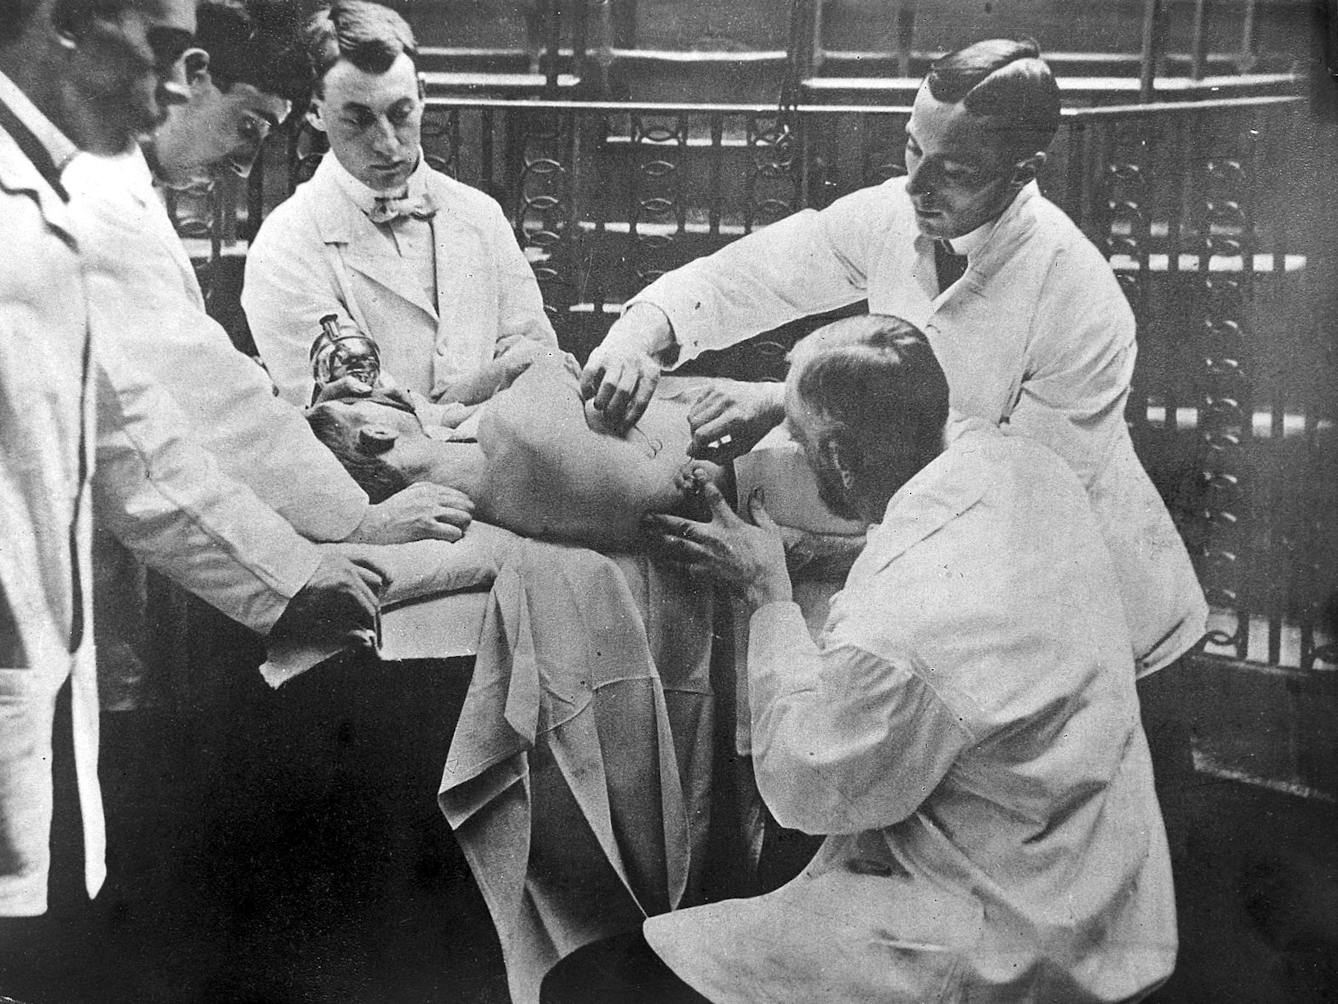 Sir Rickman John Godlee performing a surgical operation